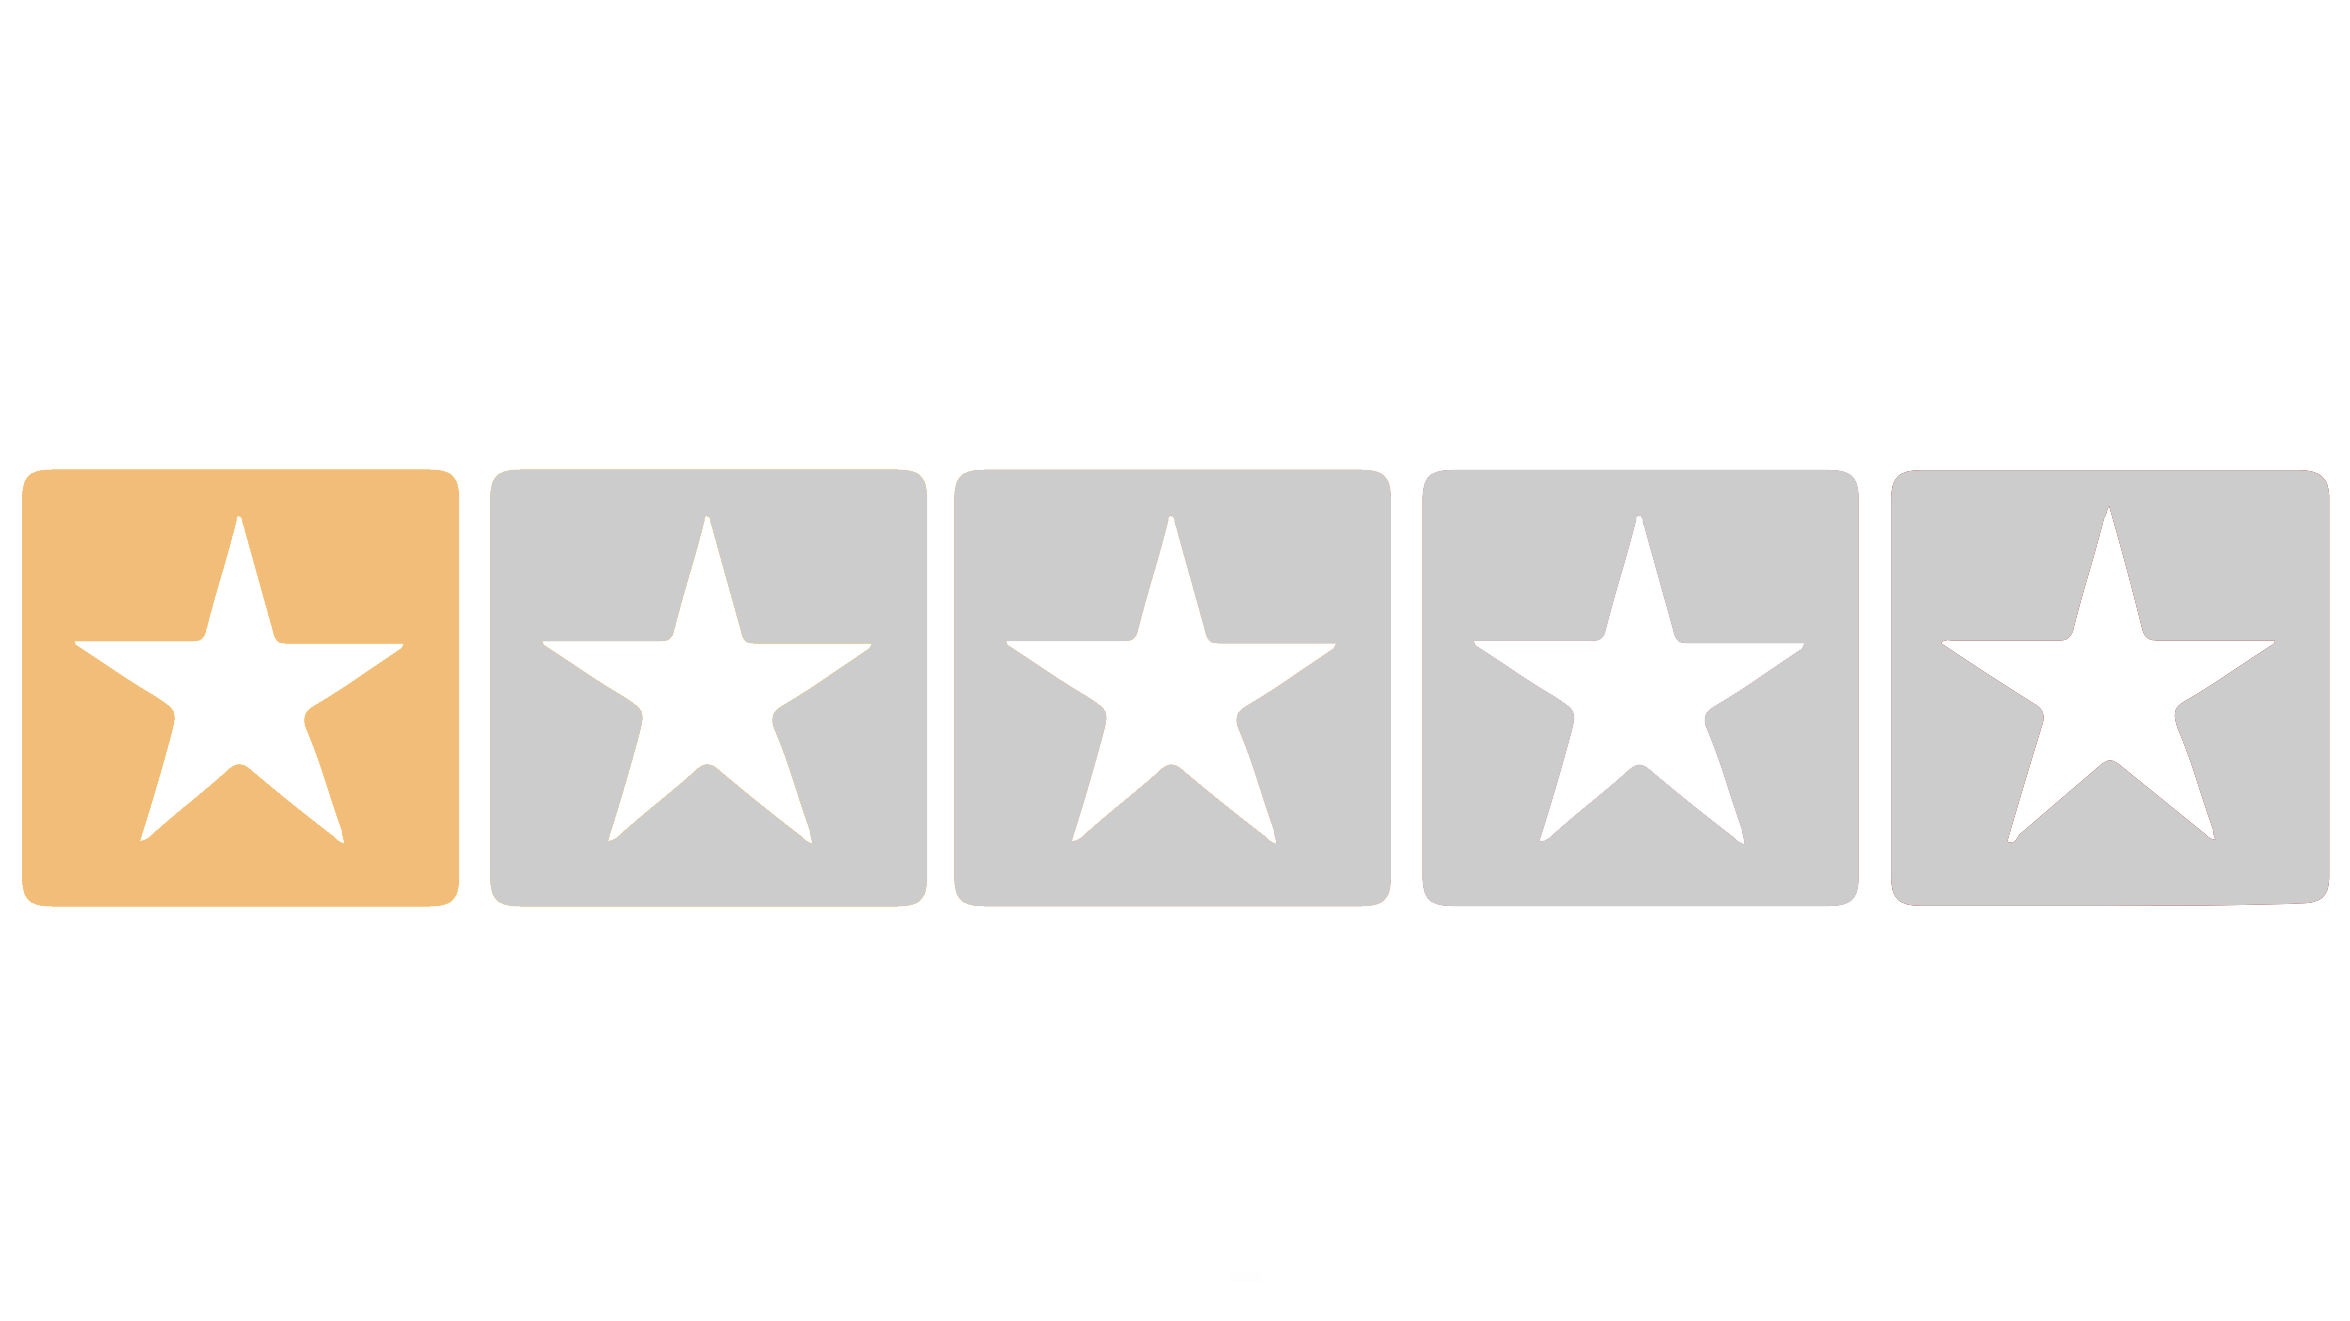 Chris G’s Best Yelp Reviews: Robert Half – 1/5 Stars